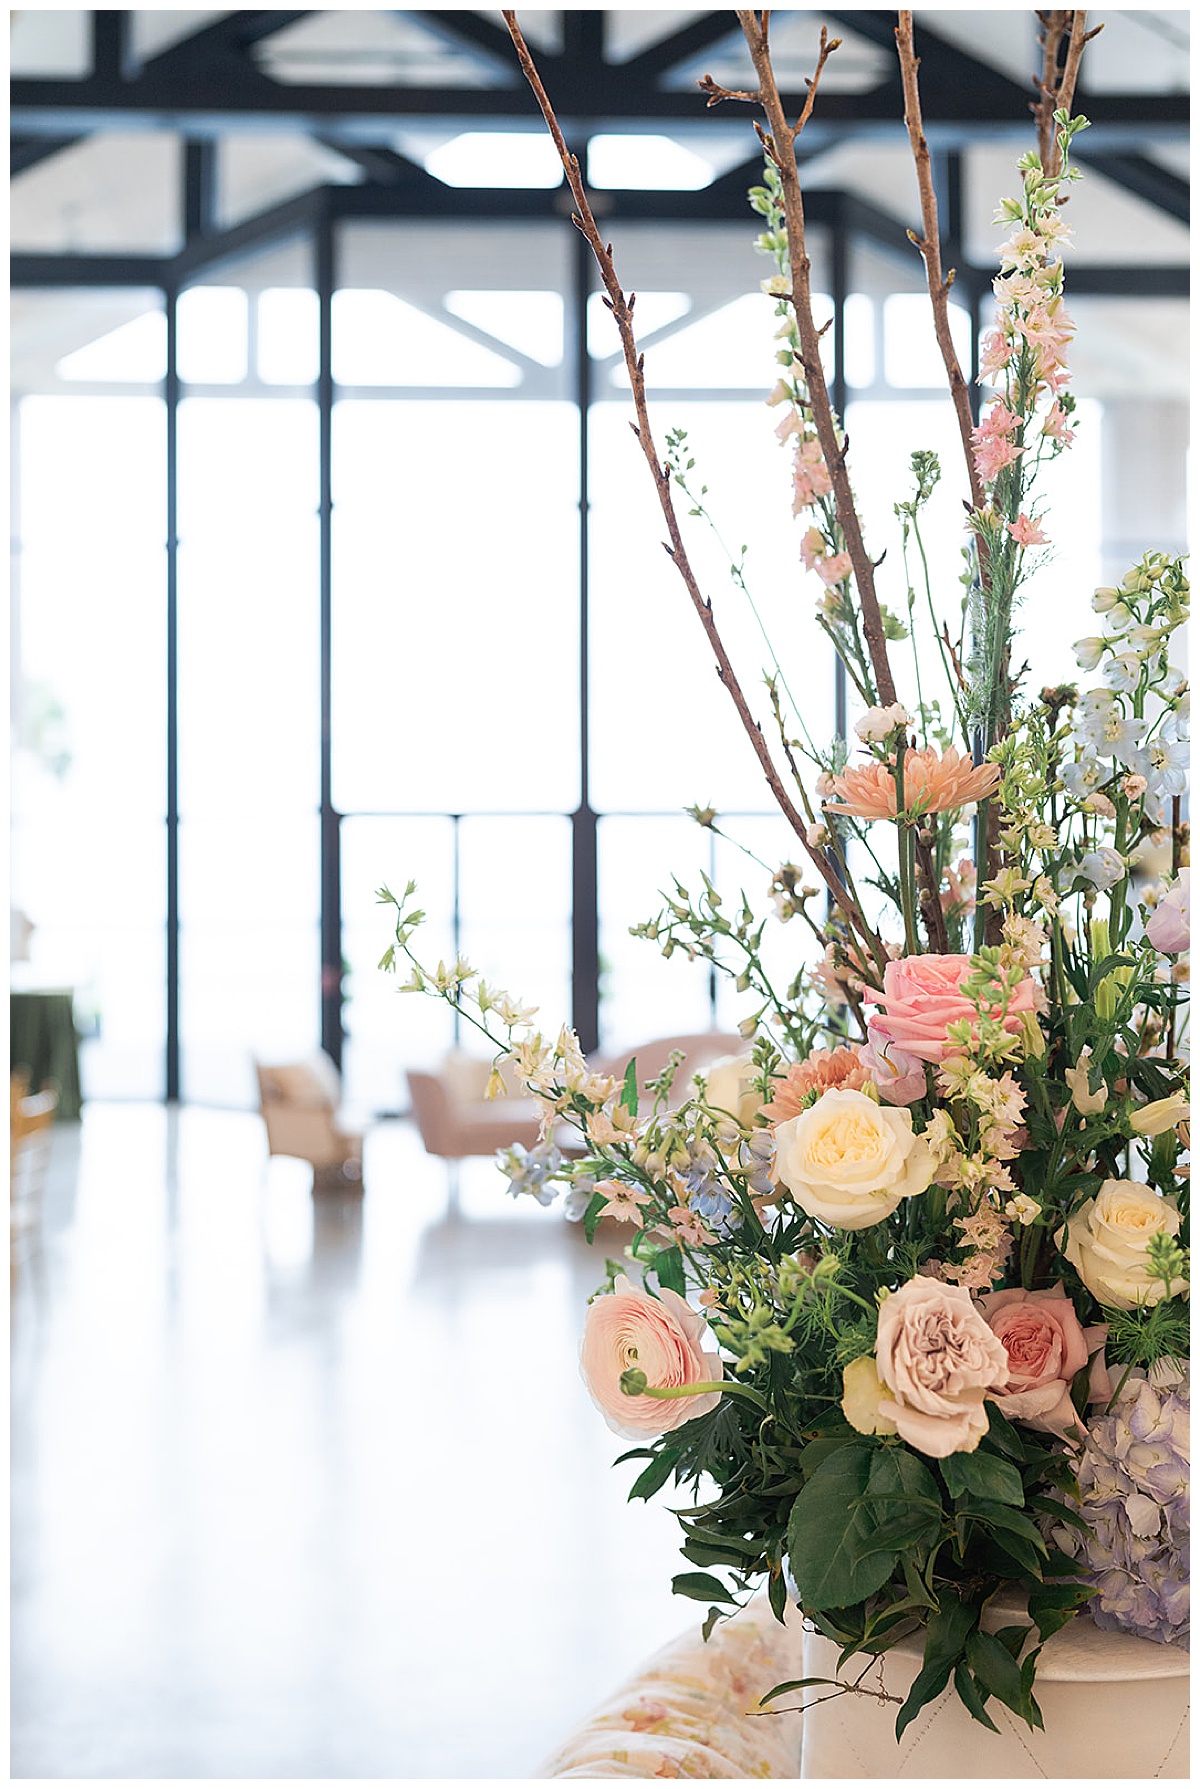 Stunning floral installation at Secret Garden Editorial